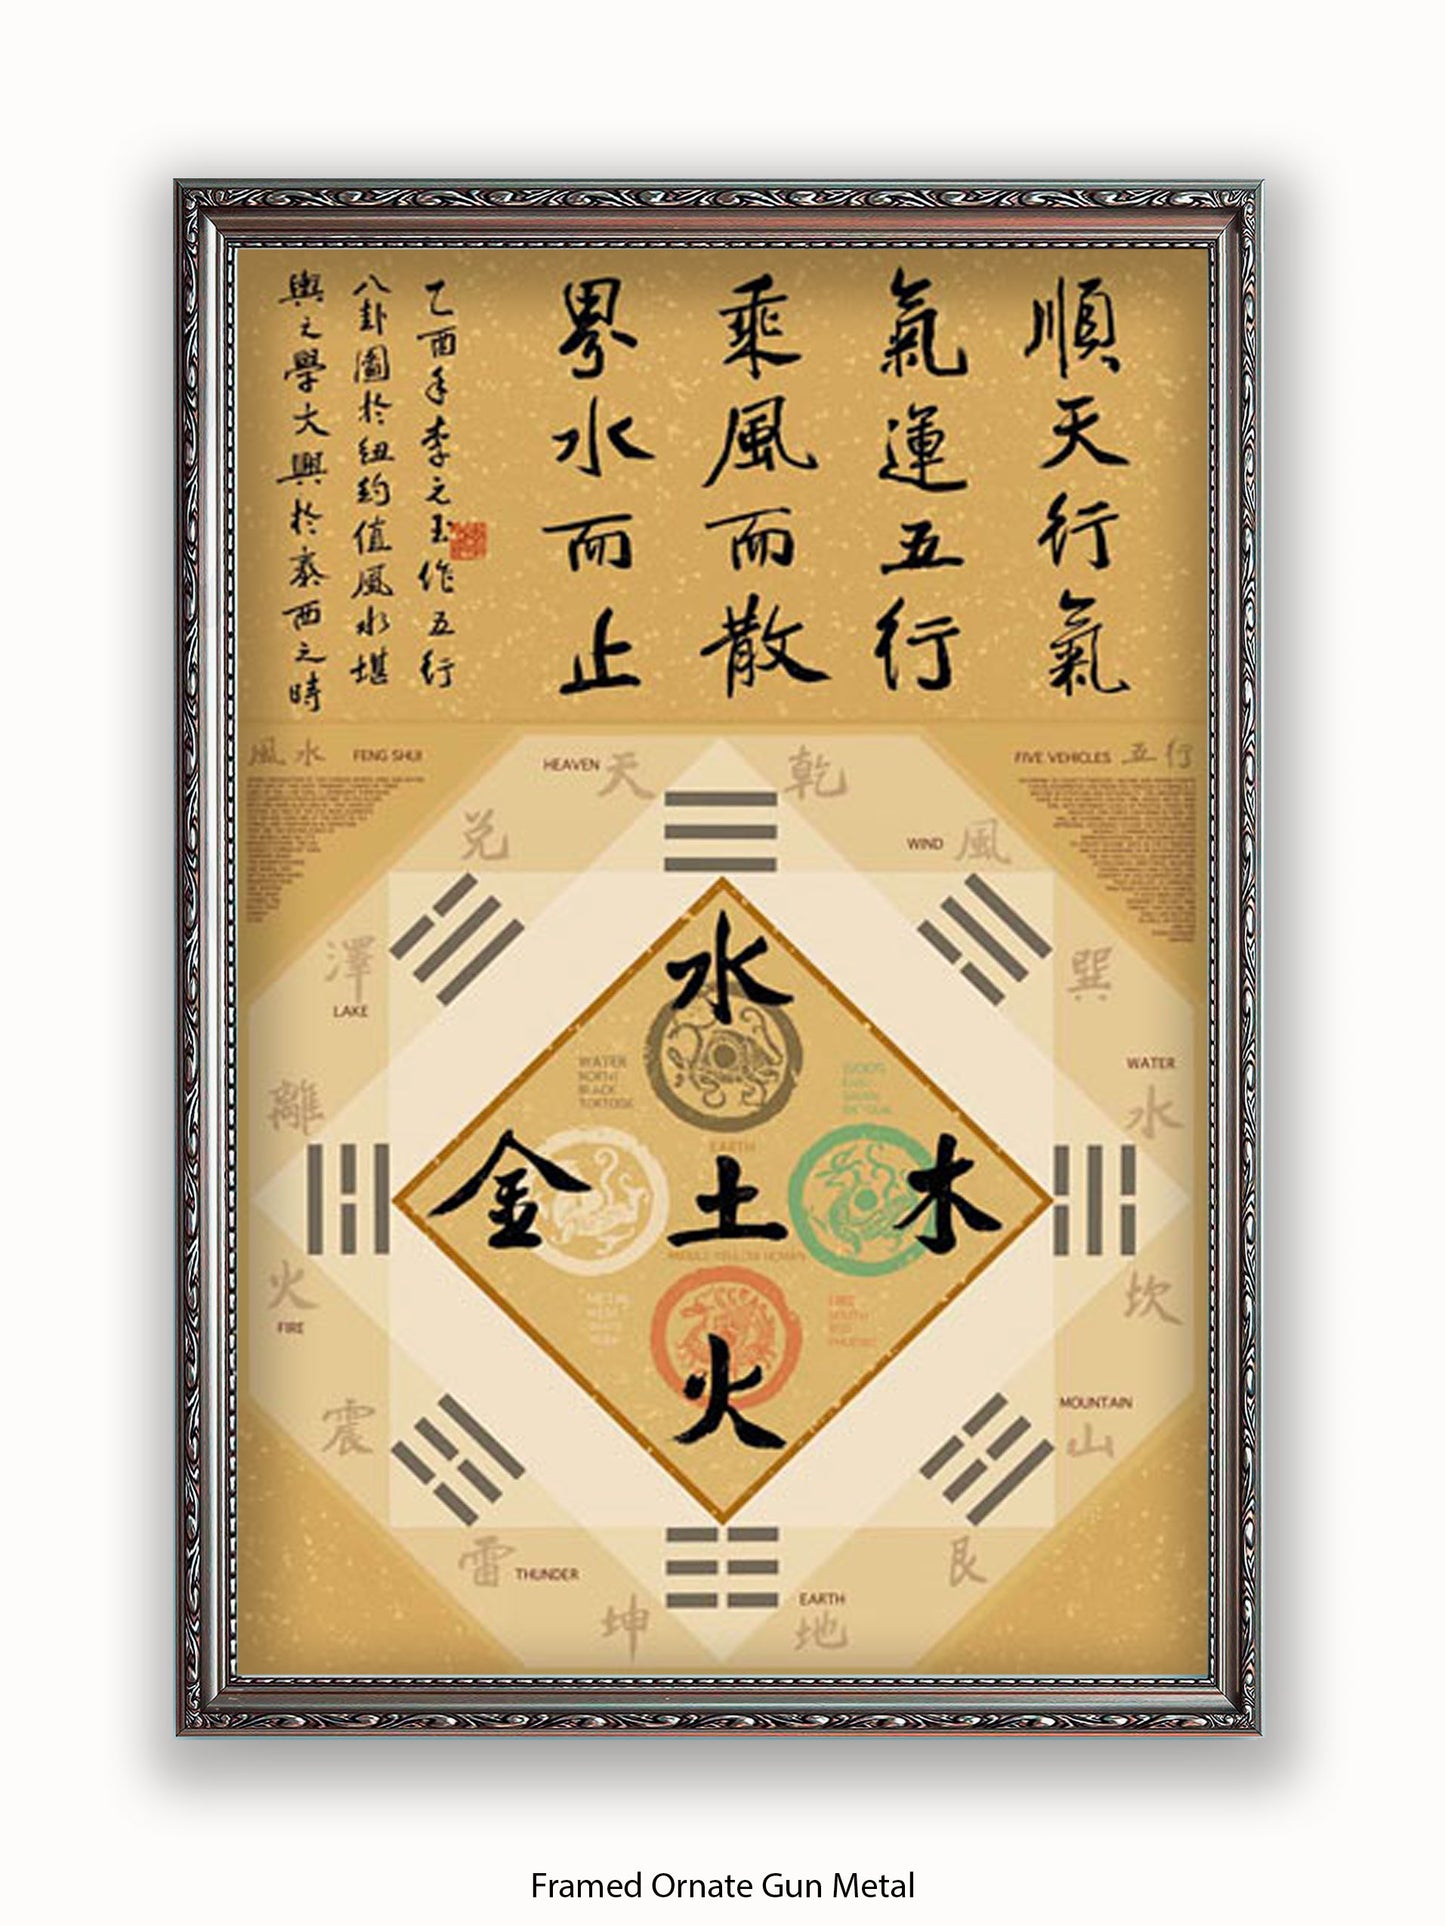 Feng Shui Poster